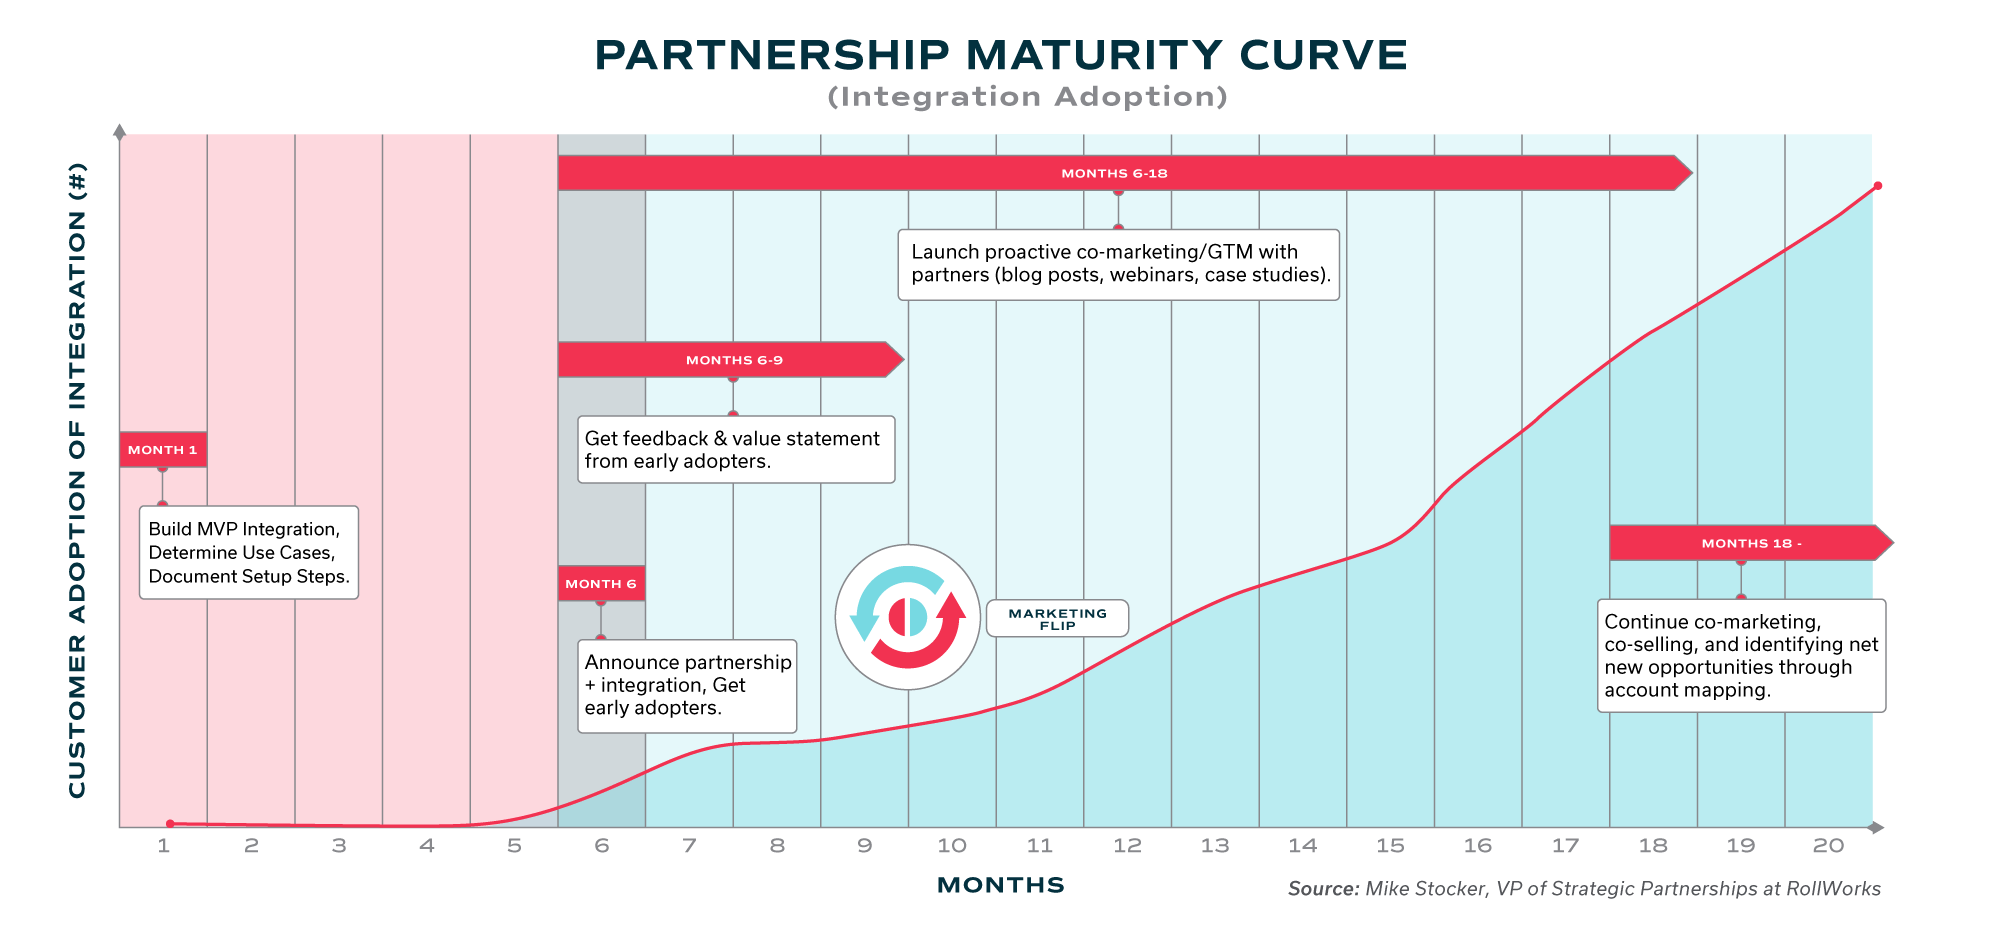 mike-stocker-rollworks-crossbeam-comarketing-flip-partnership-maturity-curve